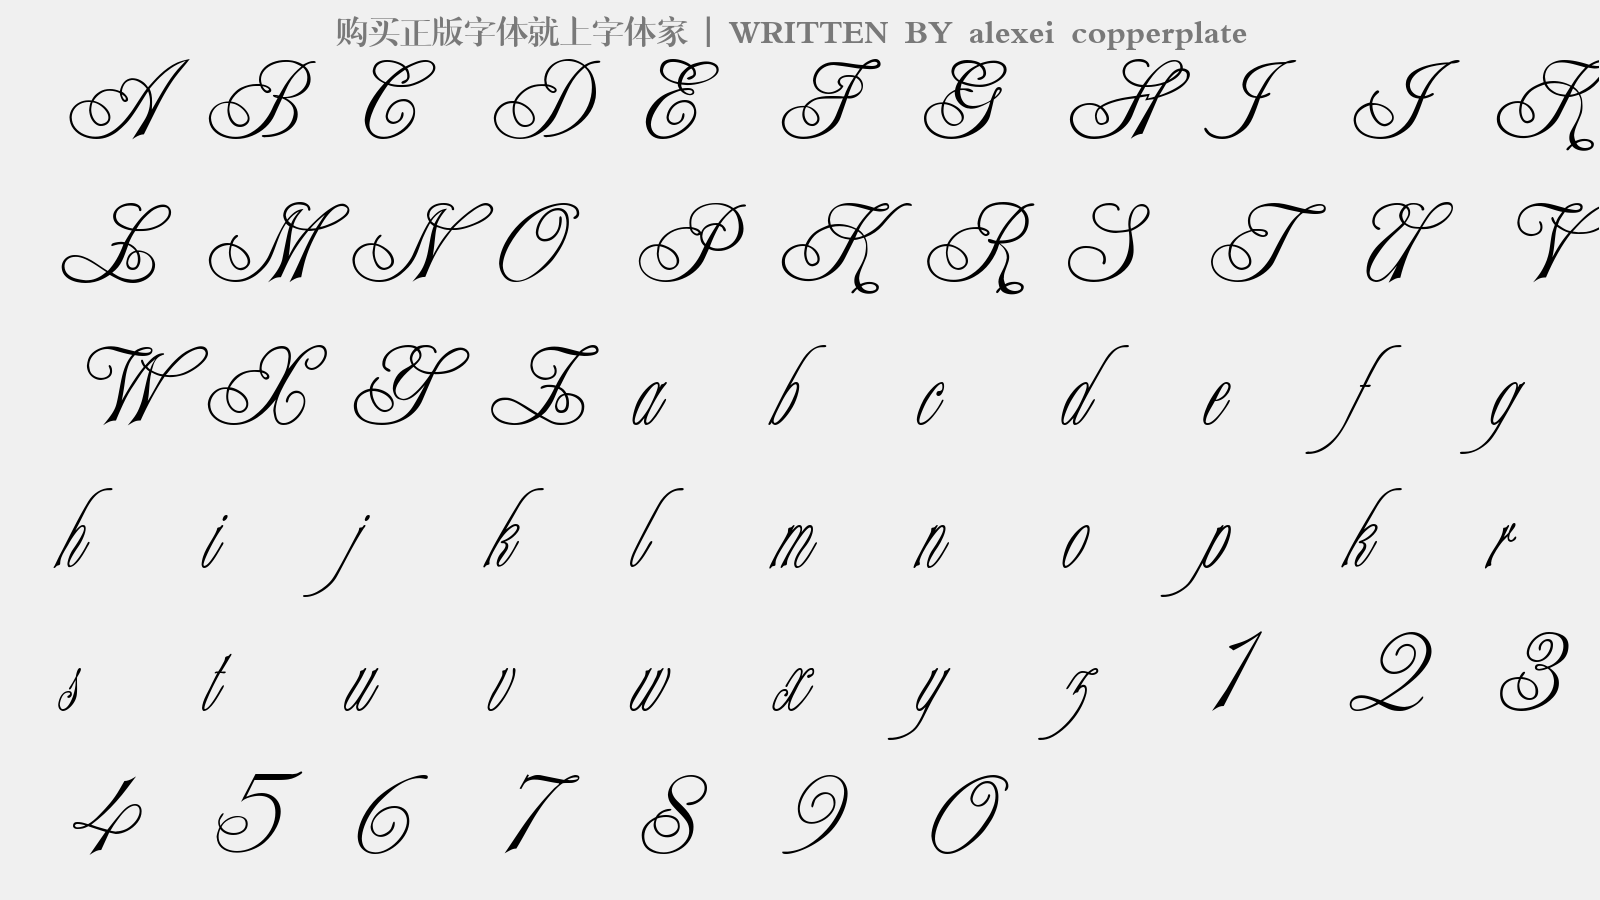 alexei copperplate免费字体下载 - 英文字体免费下载尽在字体家